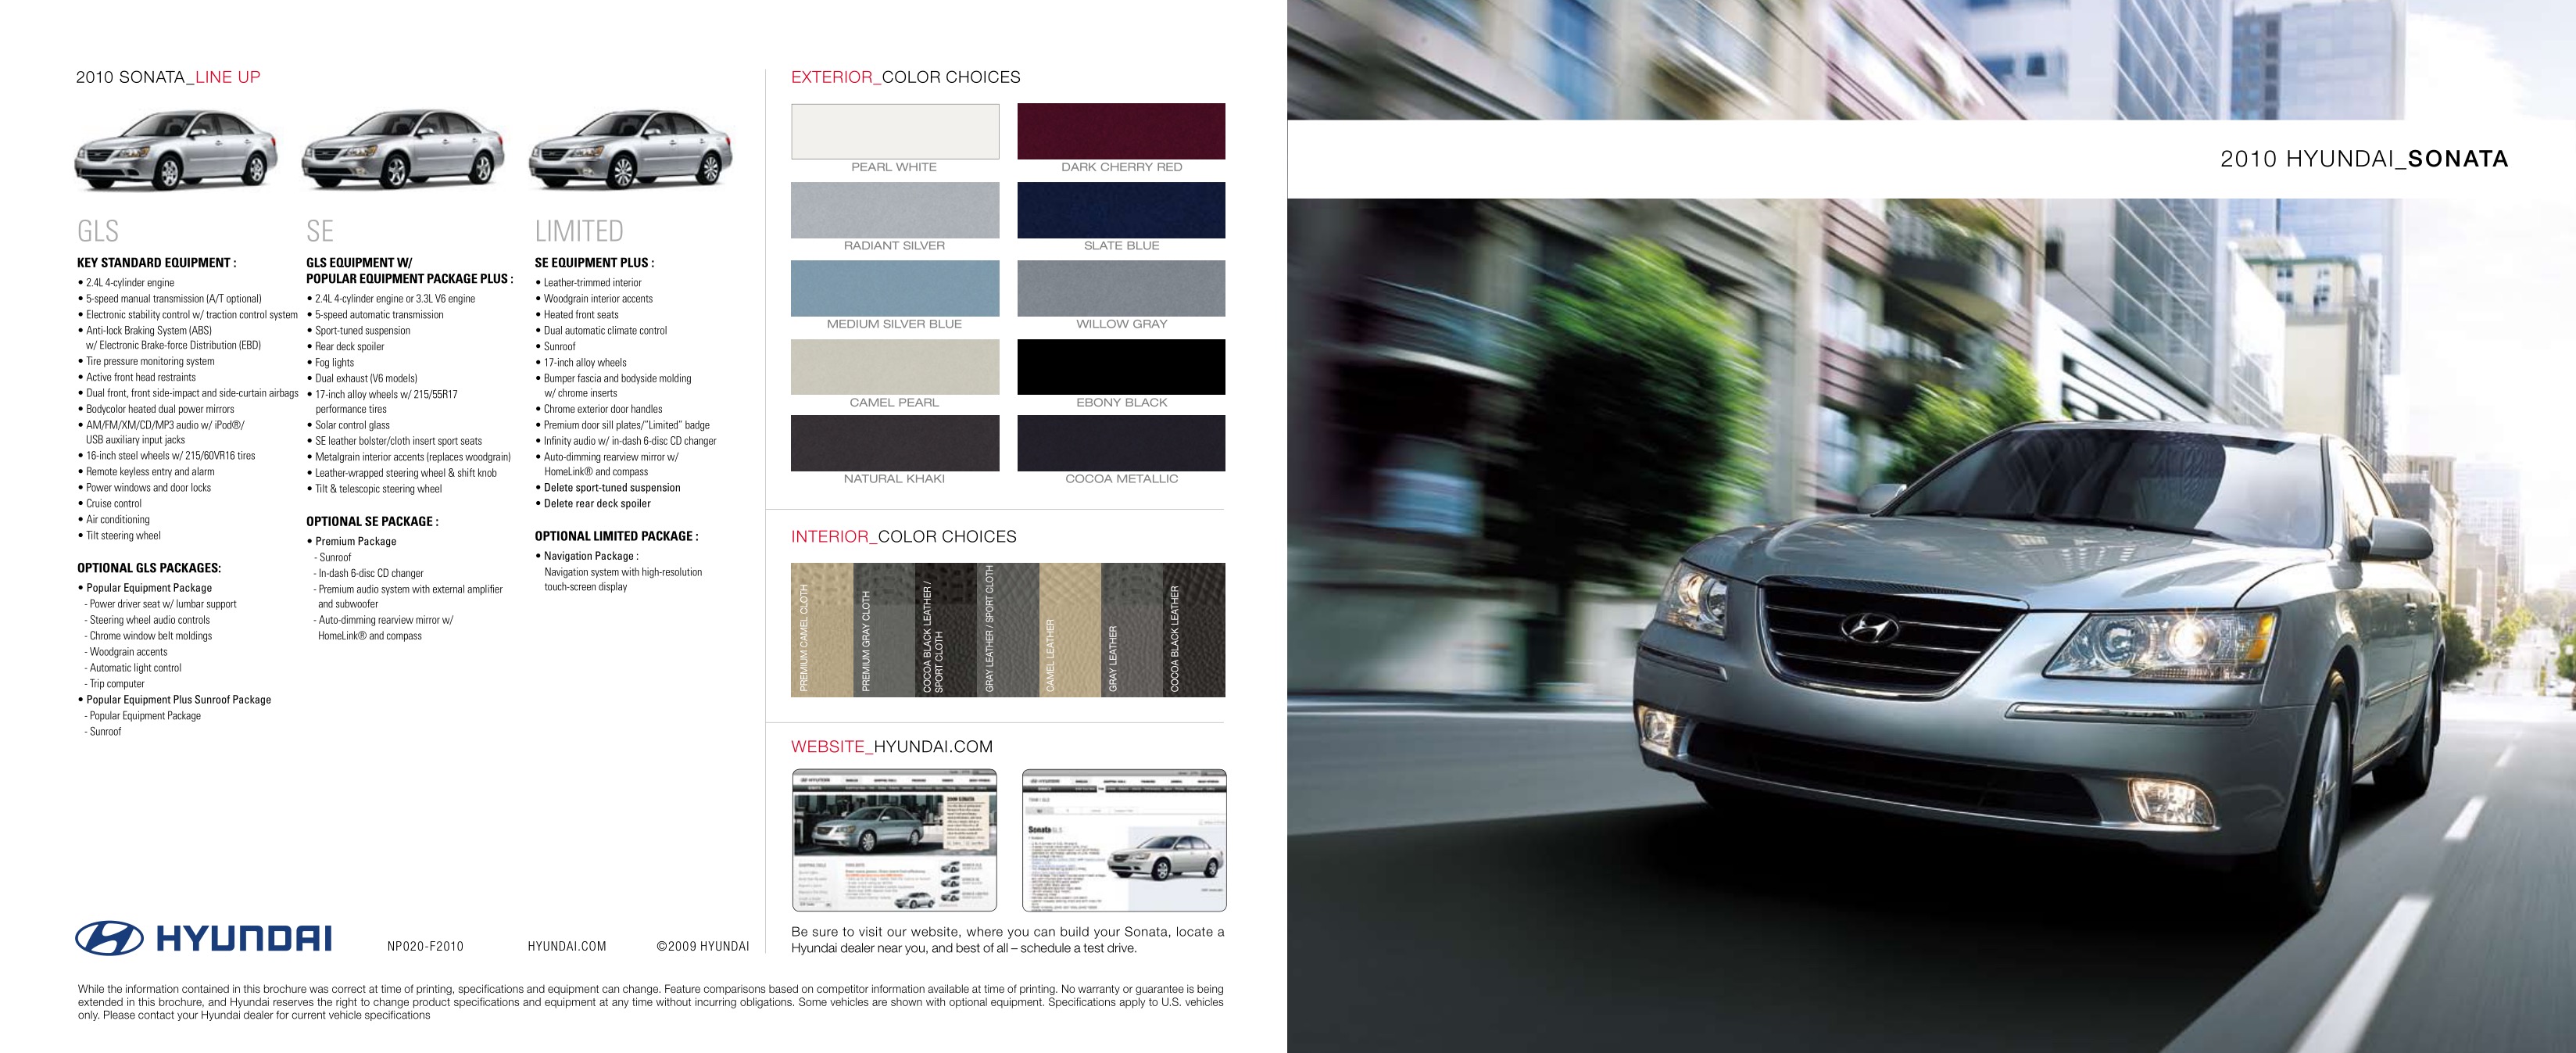 2010 Hyundai Sonata Brochure Page 4